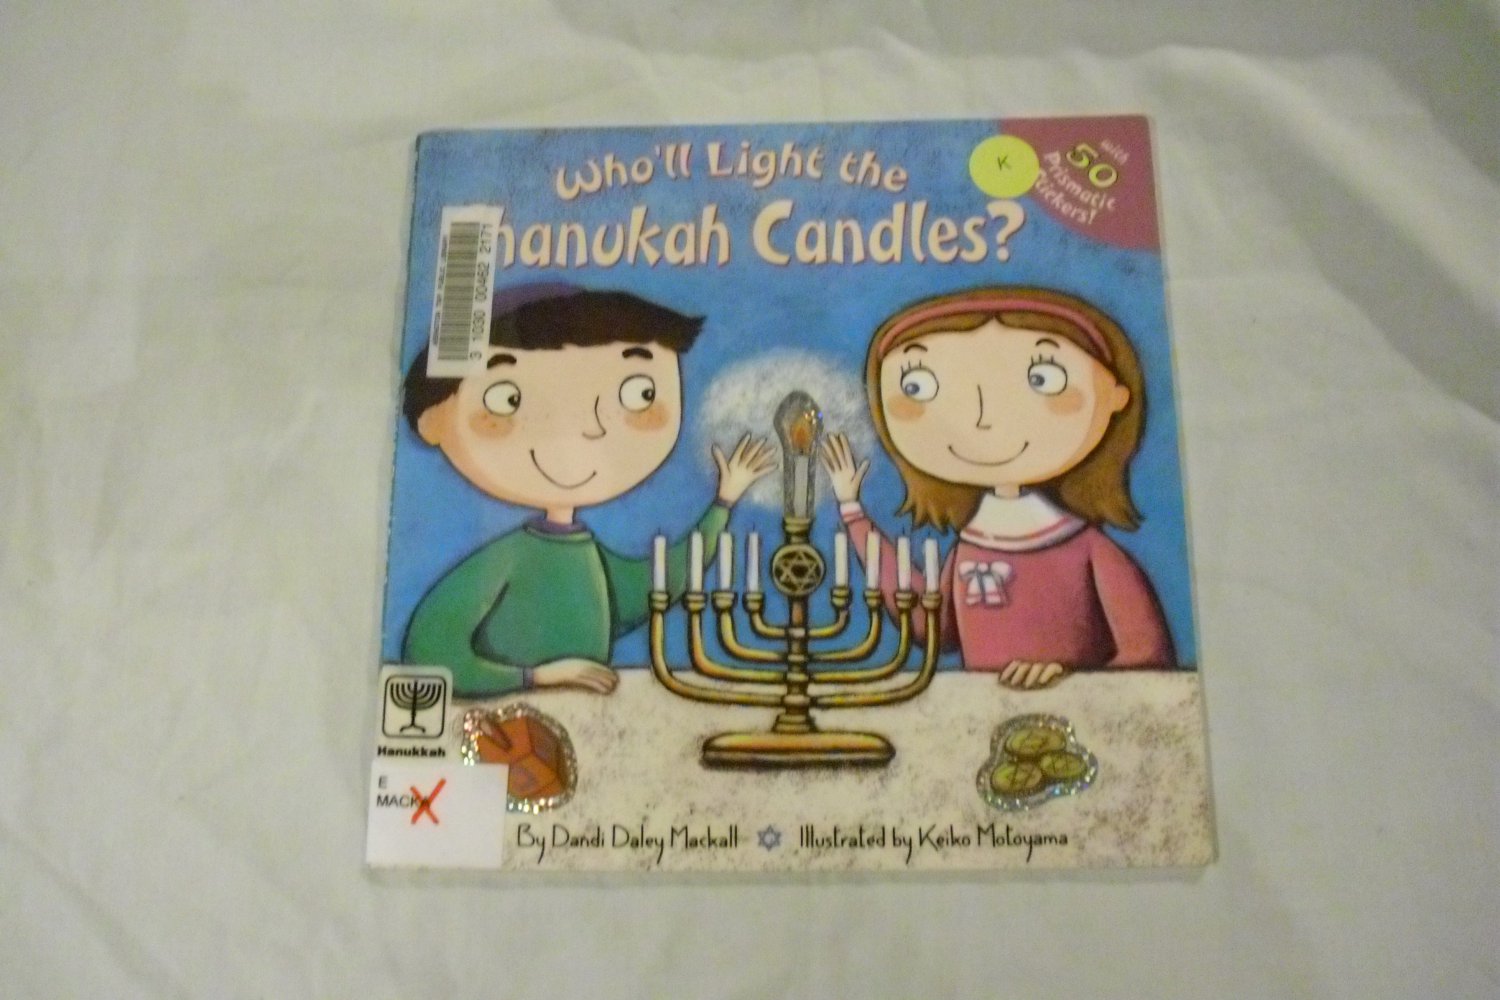 Who'll Light the Chanukah Candles? by Dandi Daley Mackall